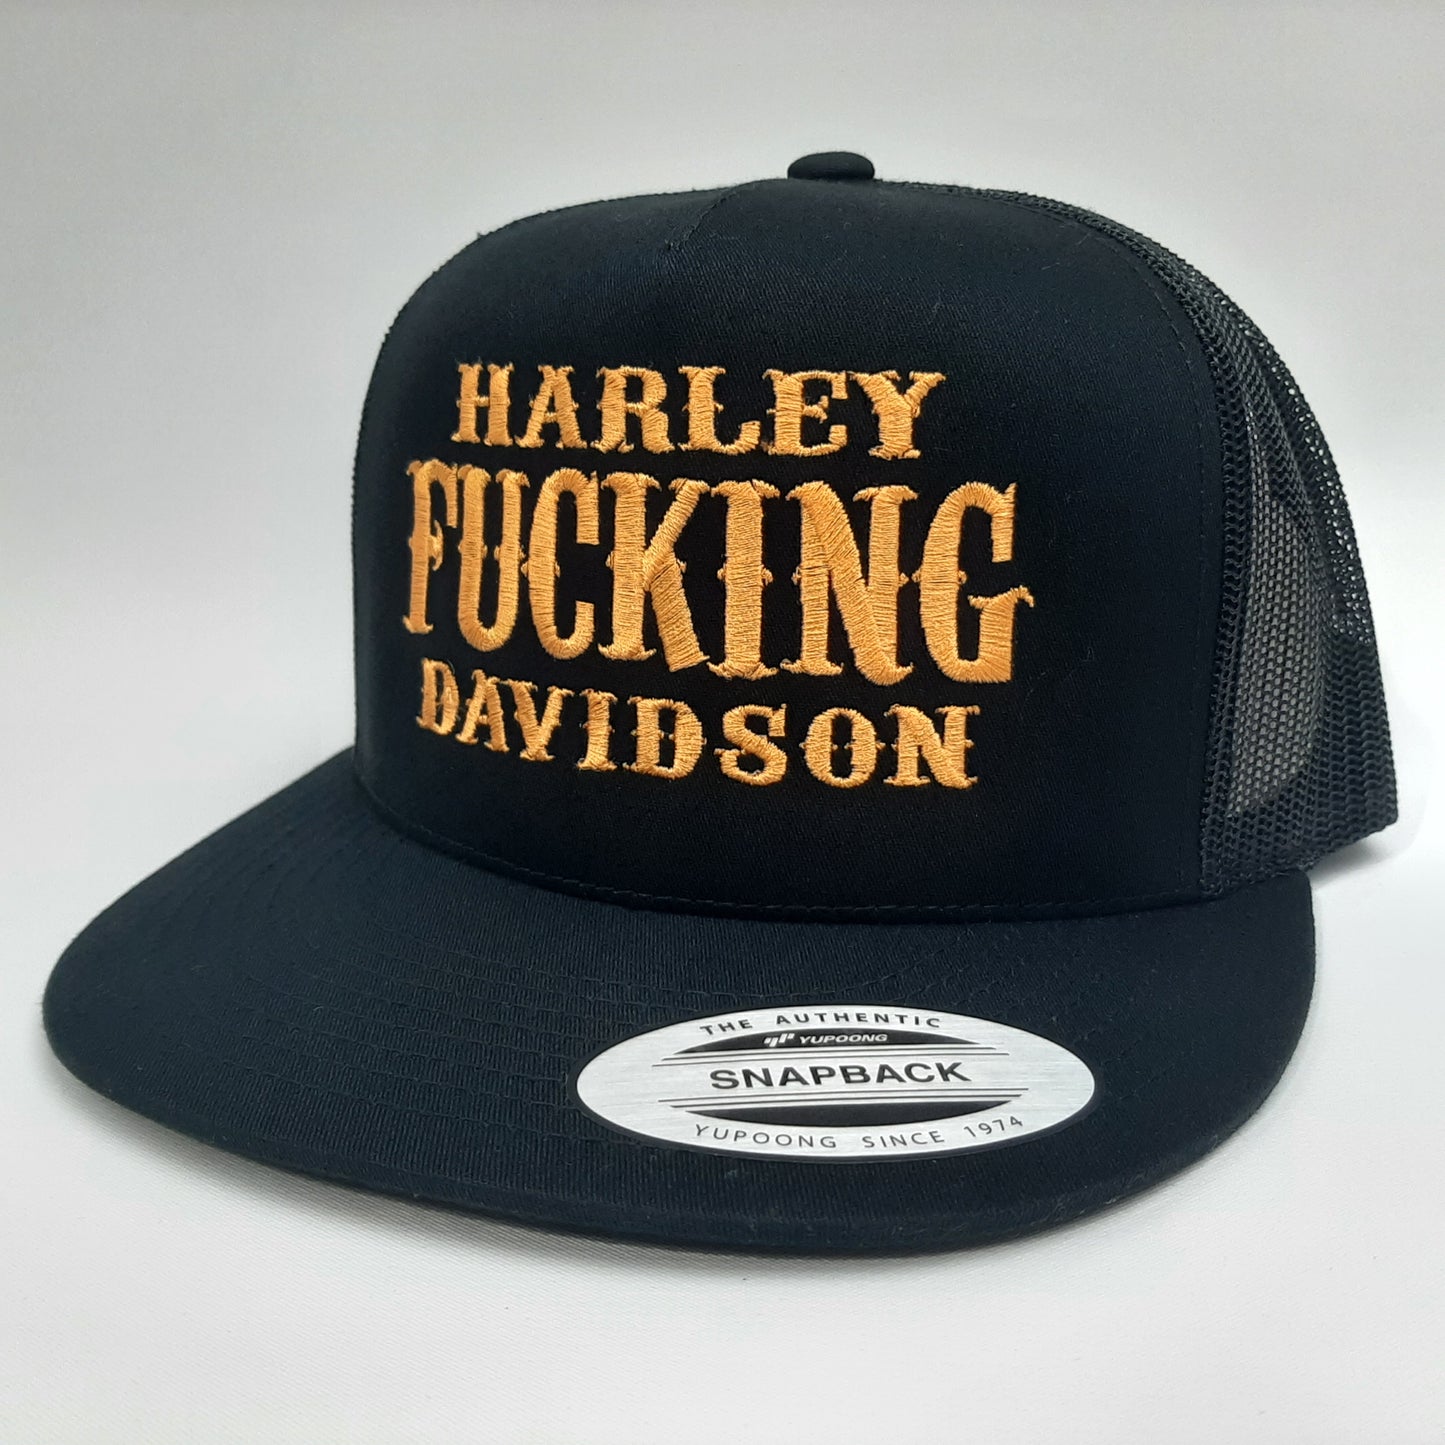 Harley Fucking Davidson Trucker Mesh Snapback Cap Hat Flat Brim Embroidered Cotton front panel polyester mesh panels Black